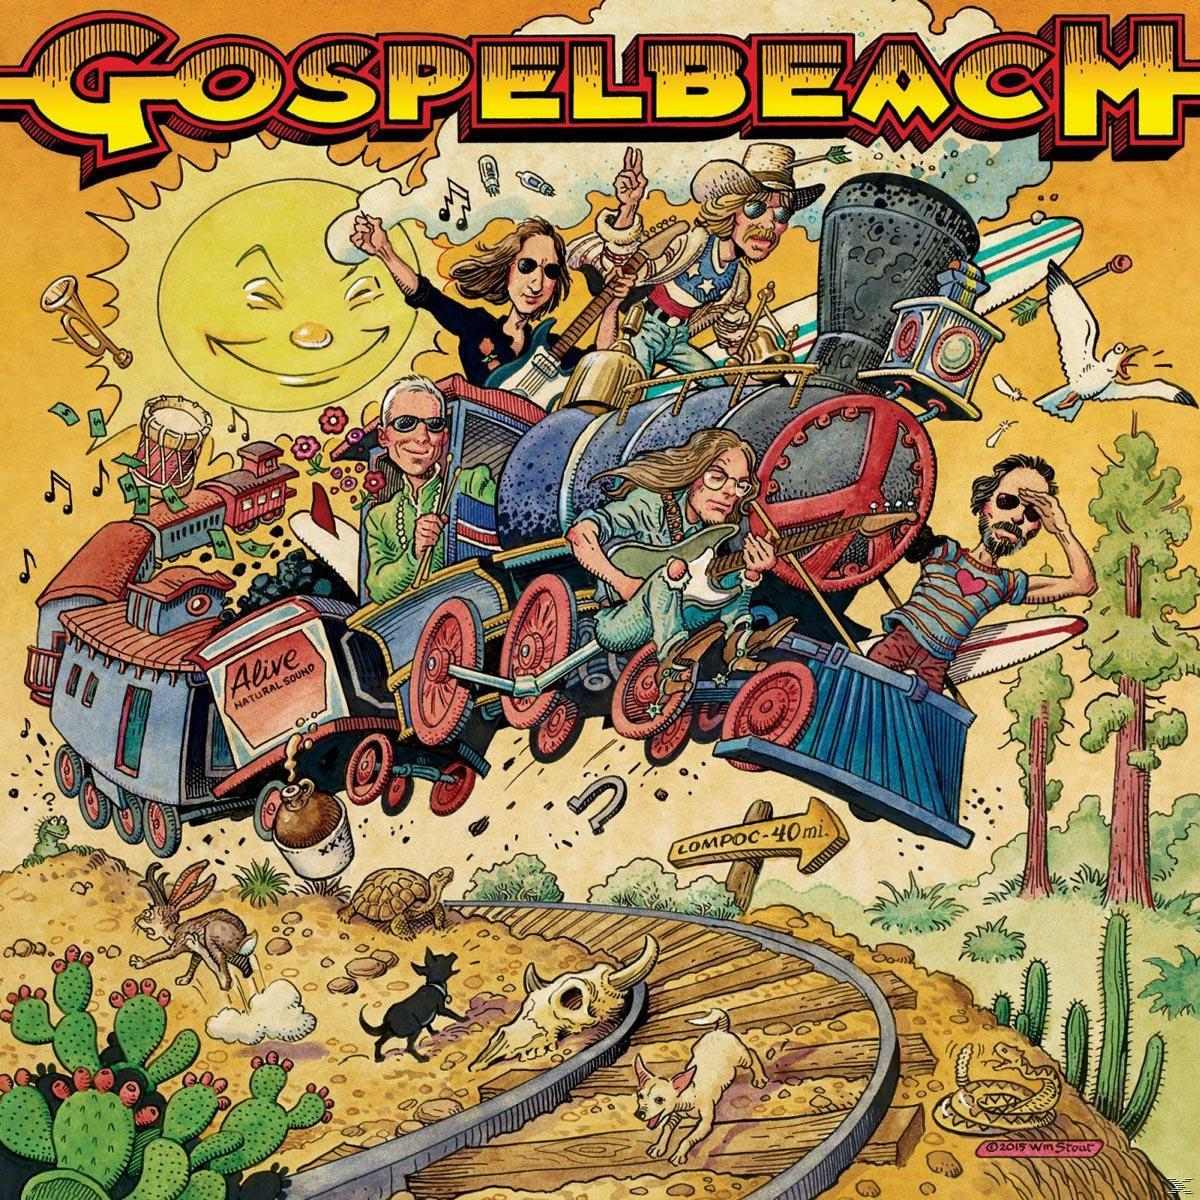 Pacific Surf - Gospelbeach (CD) Line -